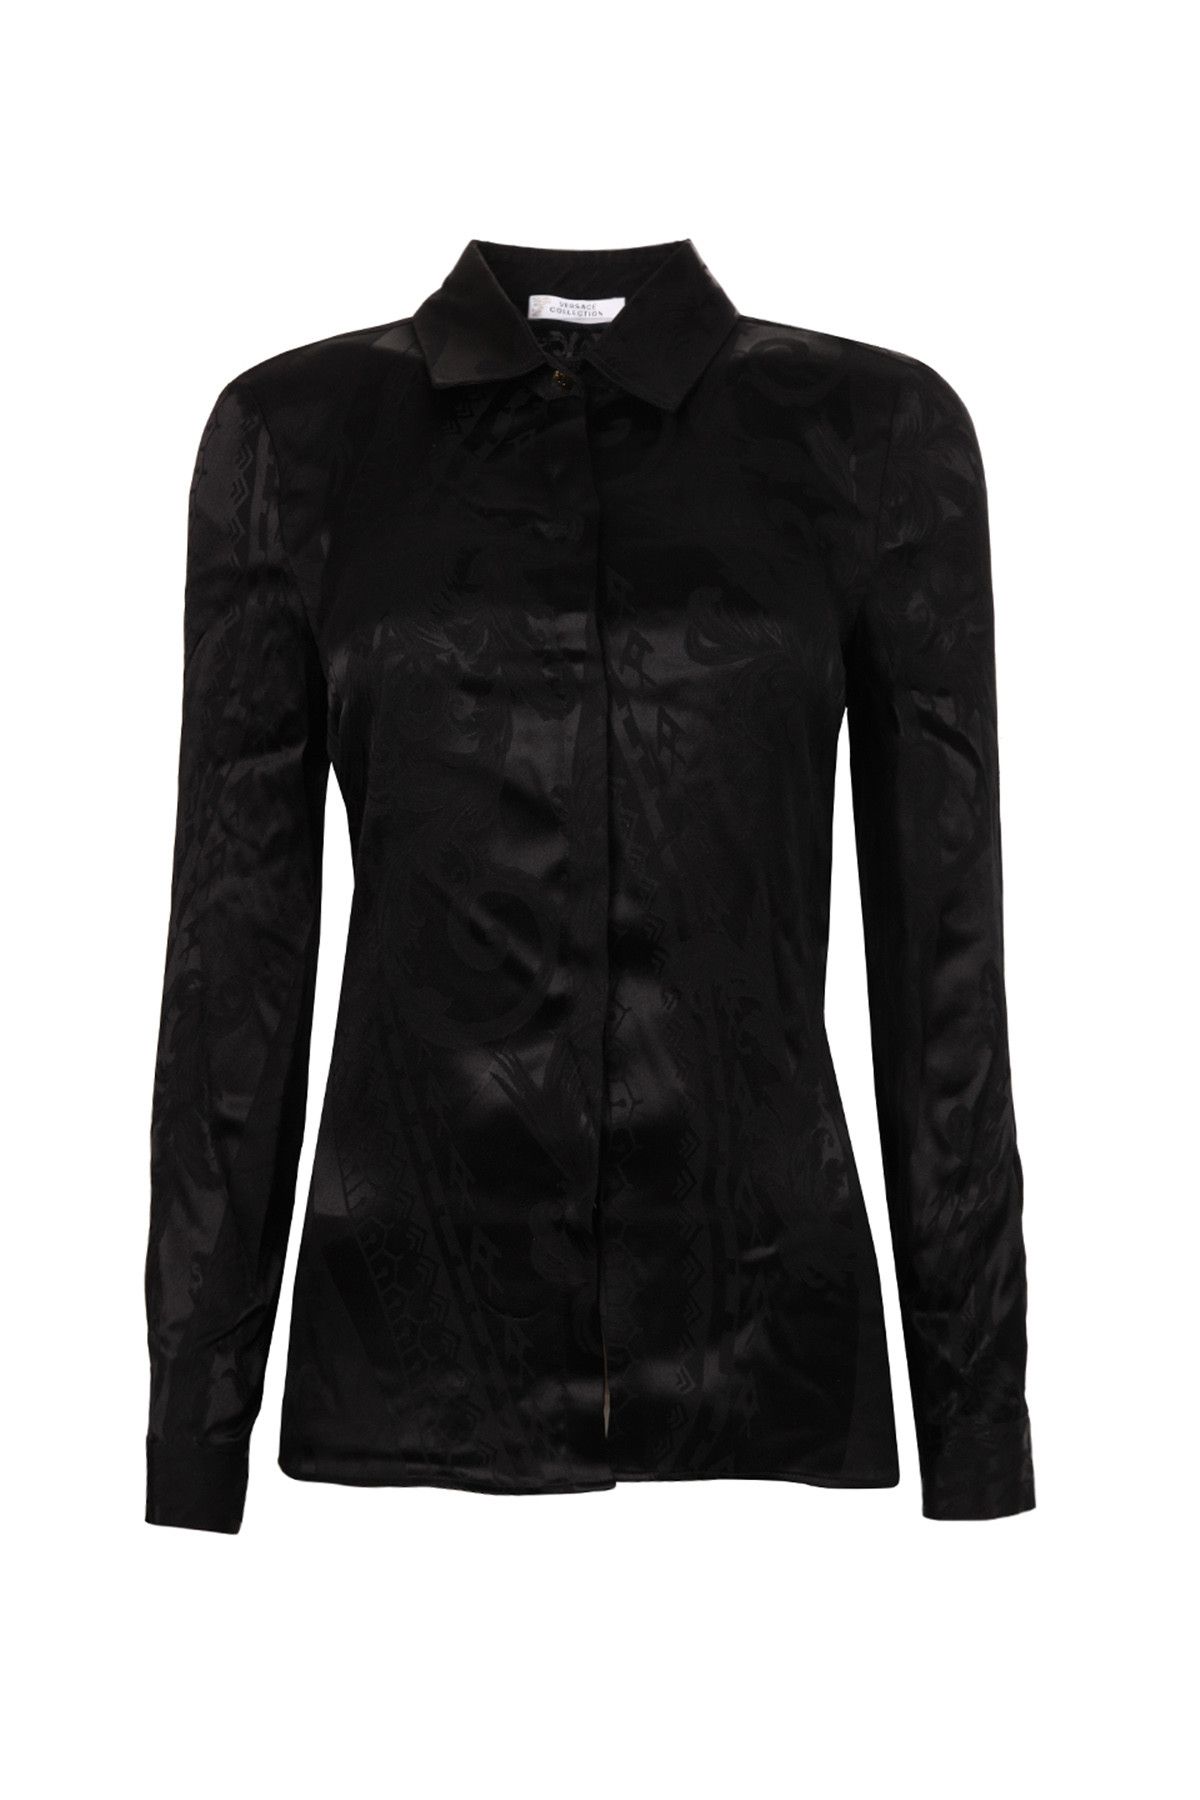 Versace Siyah Kadın Gömlek G602002G32933